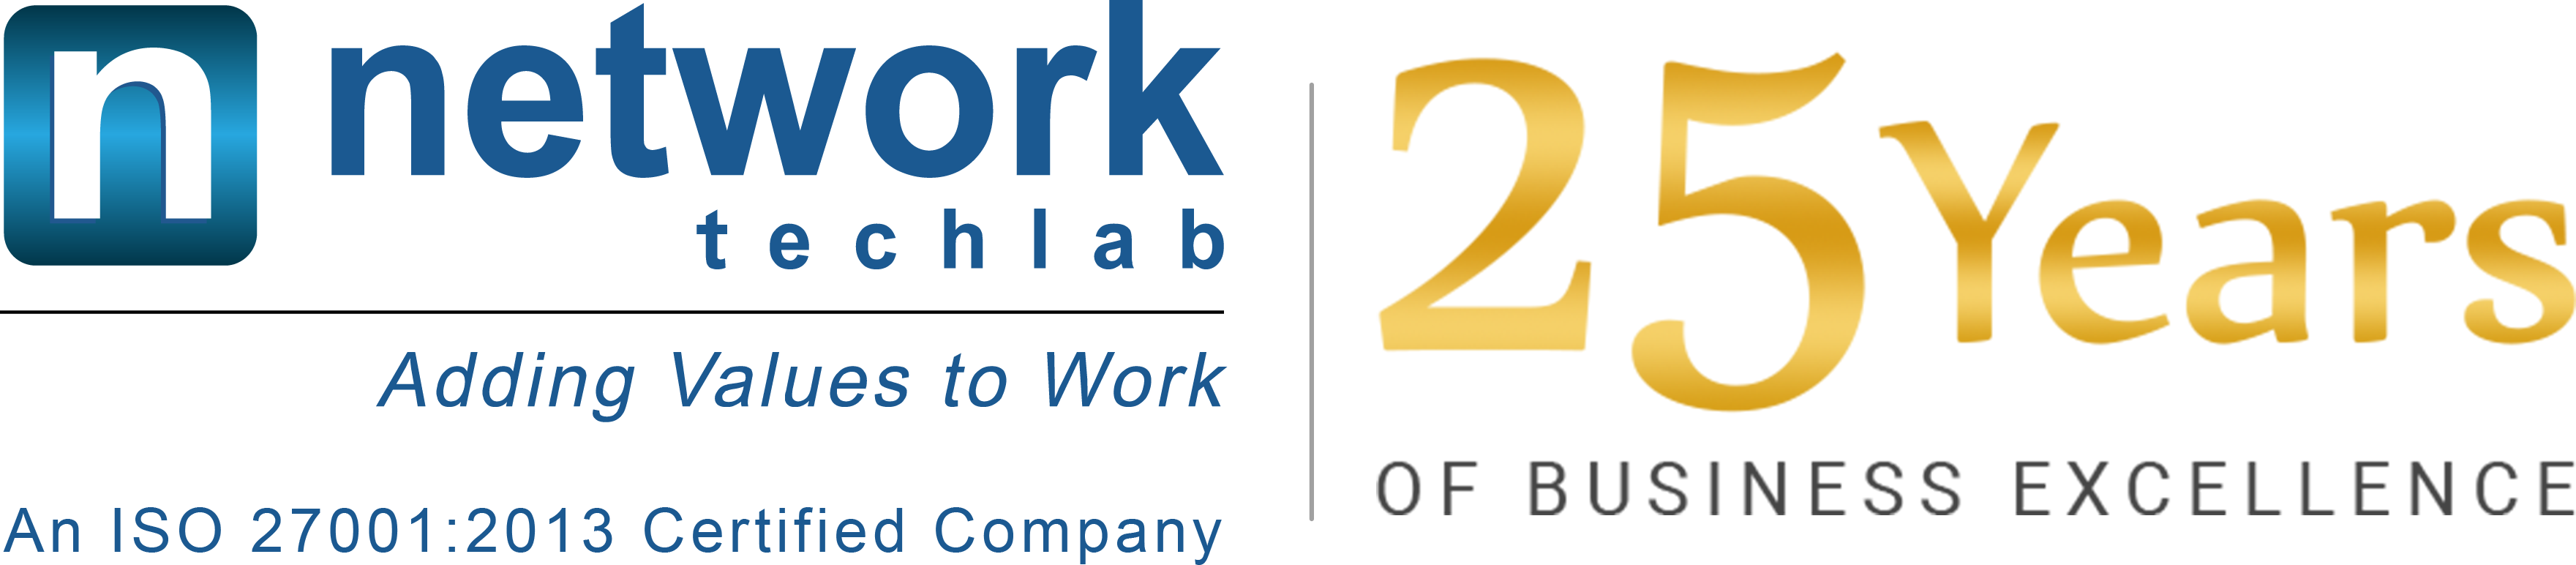 Network Techlab-Network Techlab